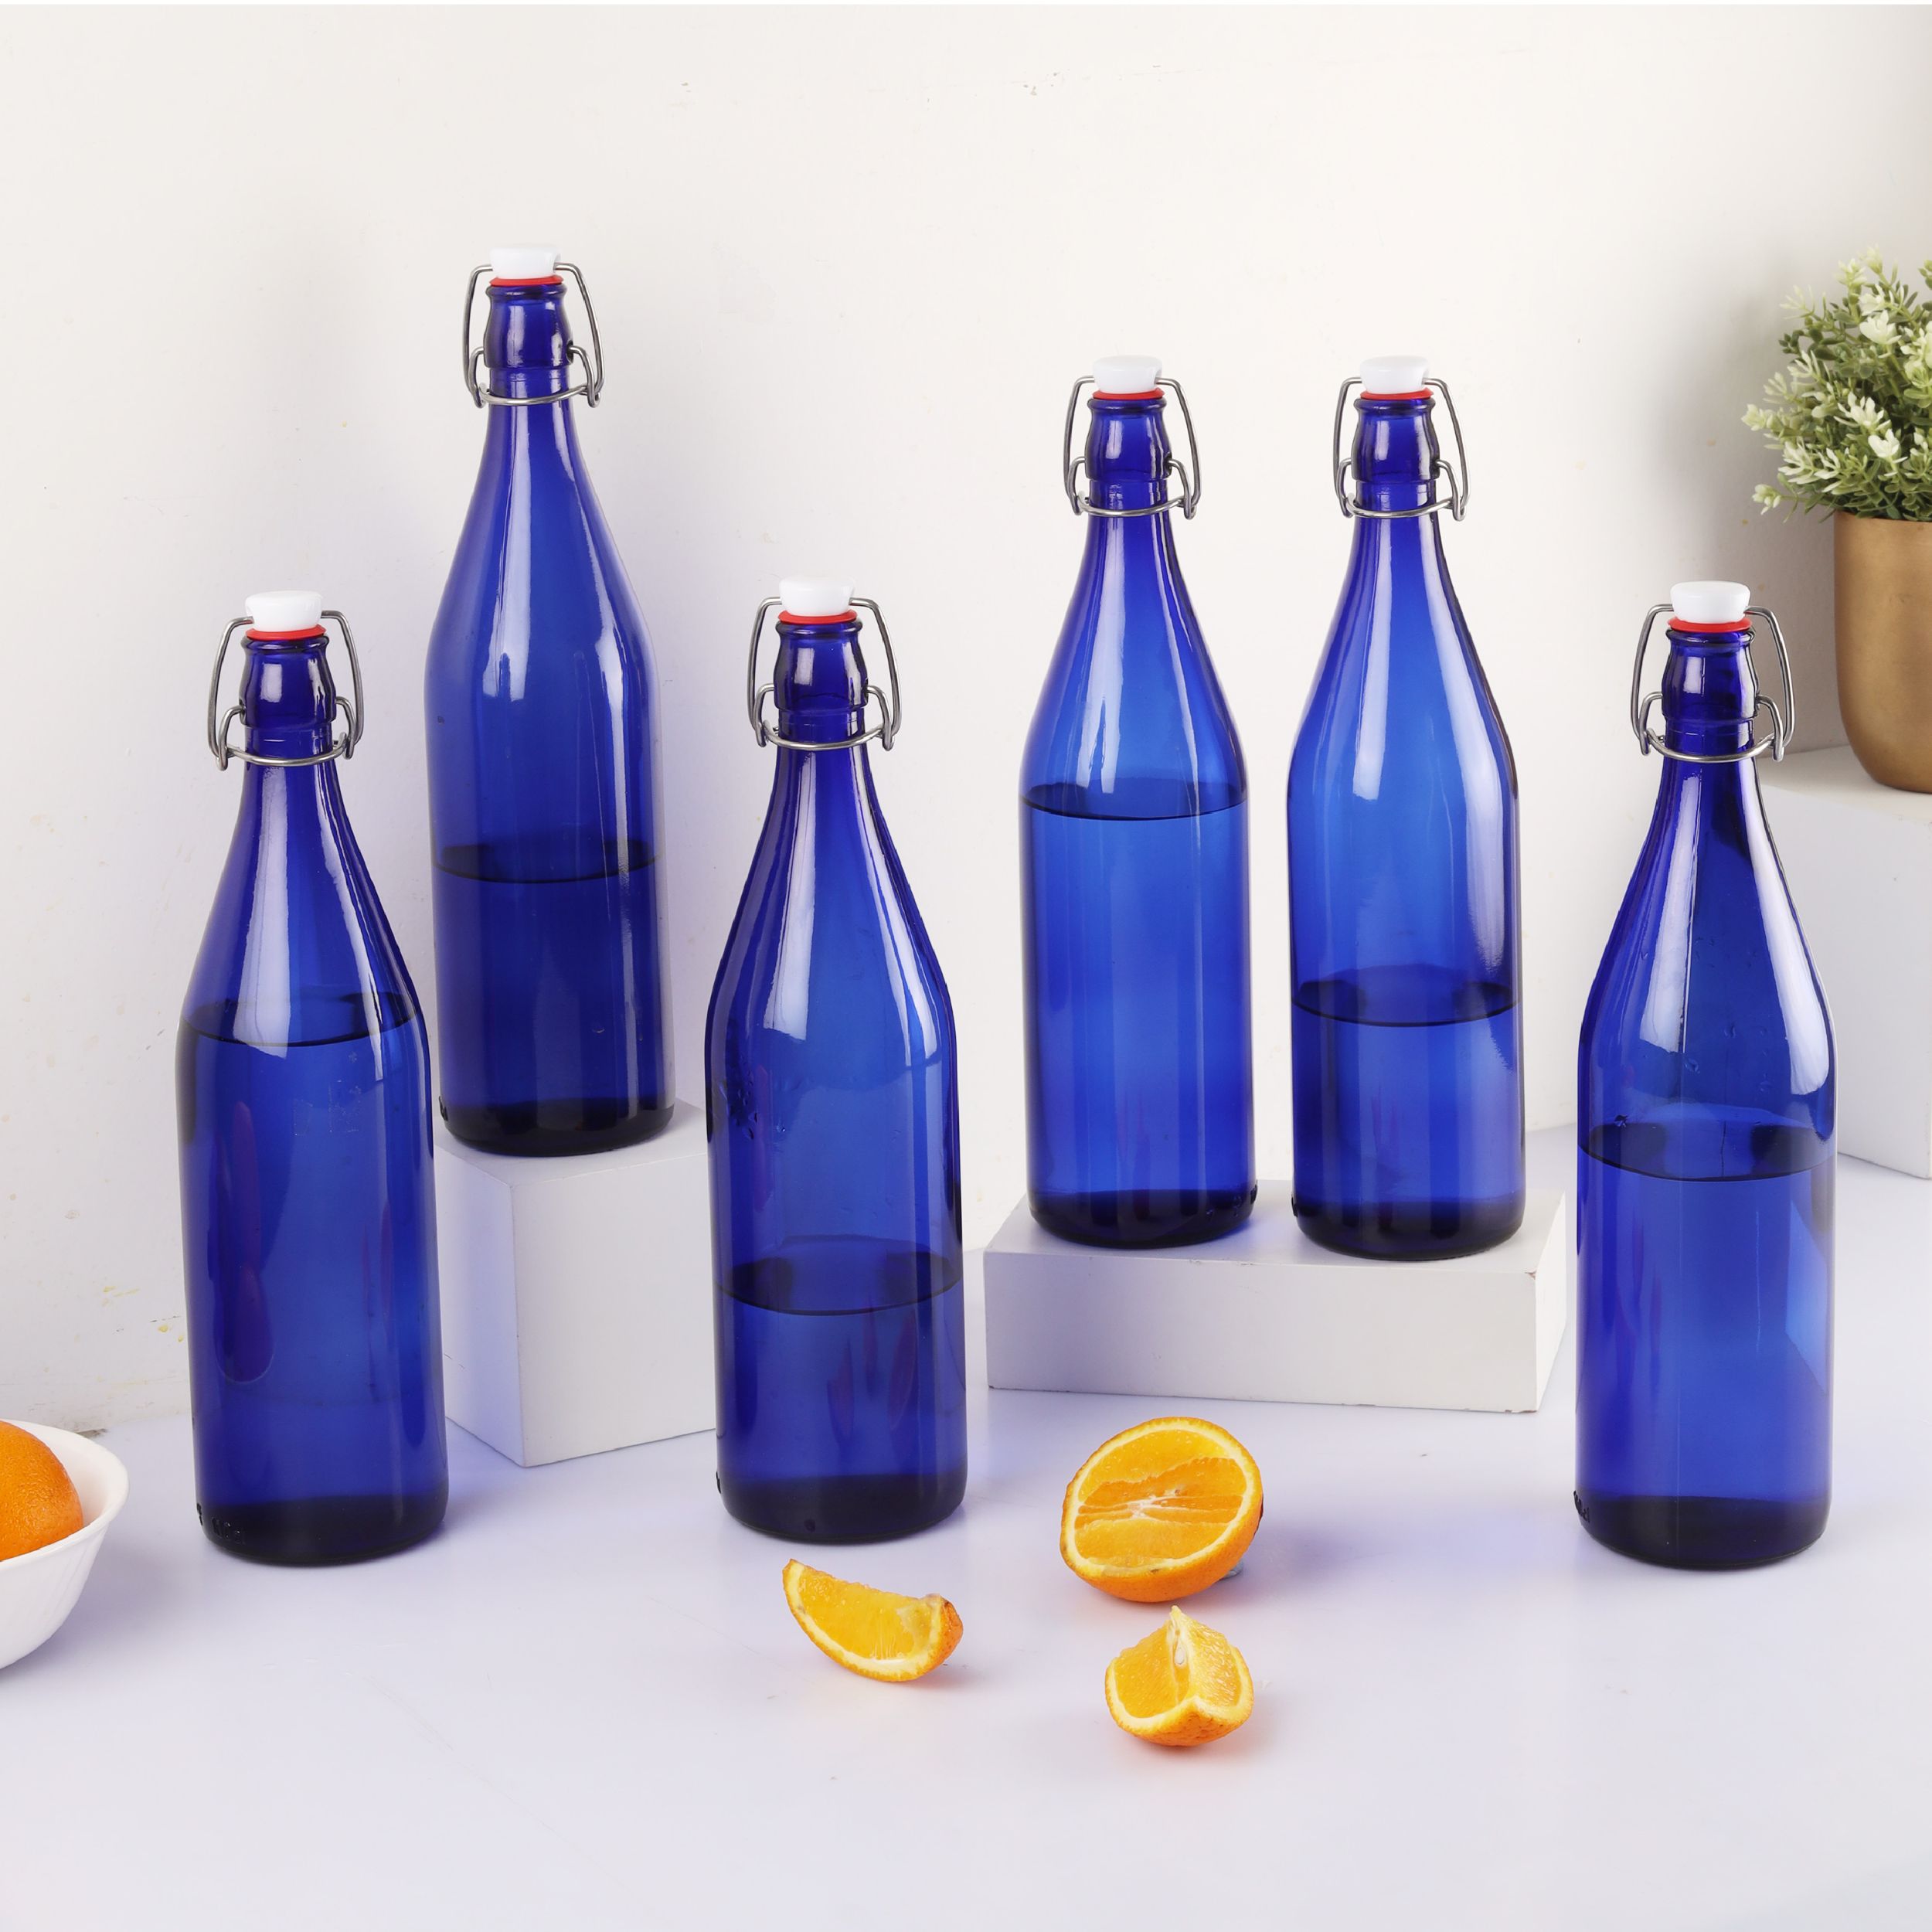 Aquaria Glass Water Bottle, 1000ml Blue / 1000ml / 6 Pieces